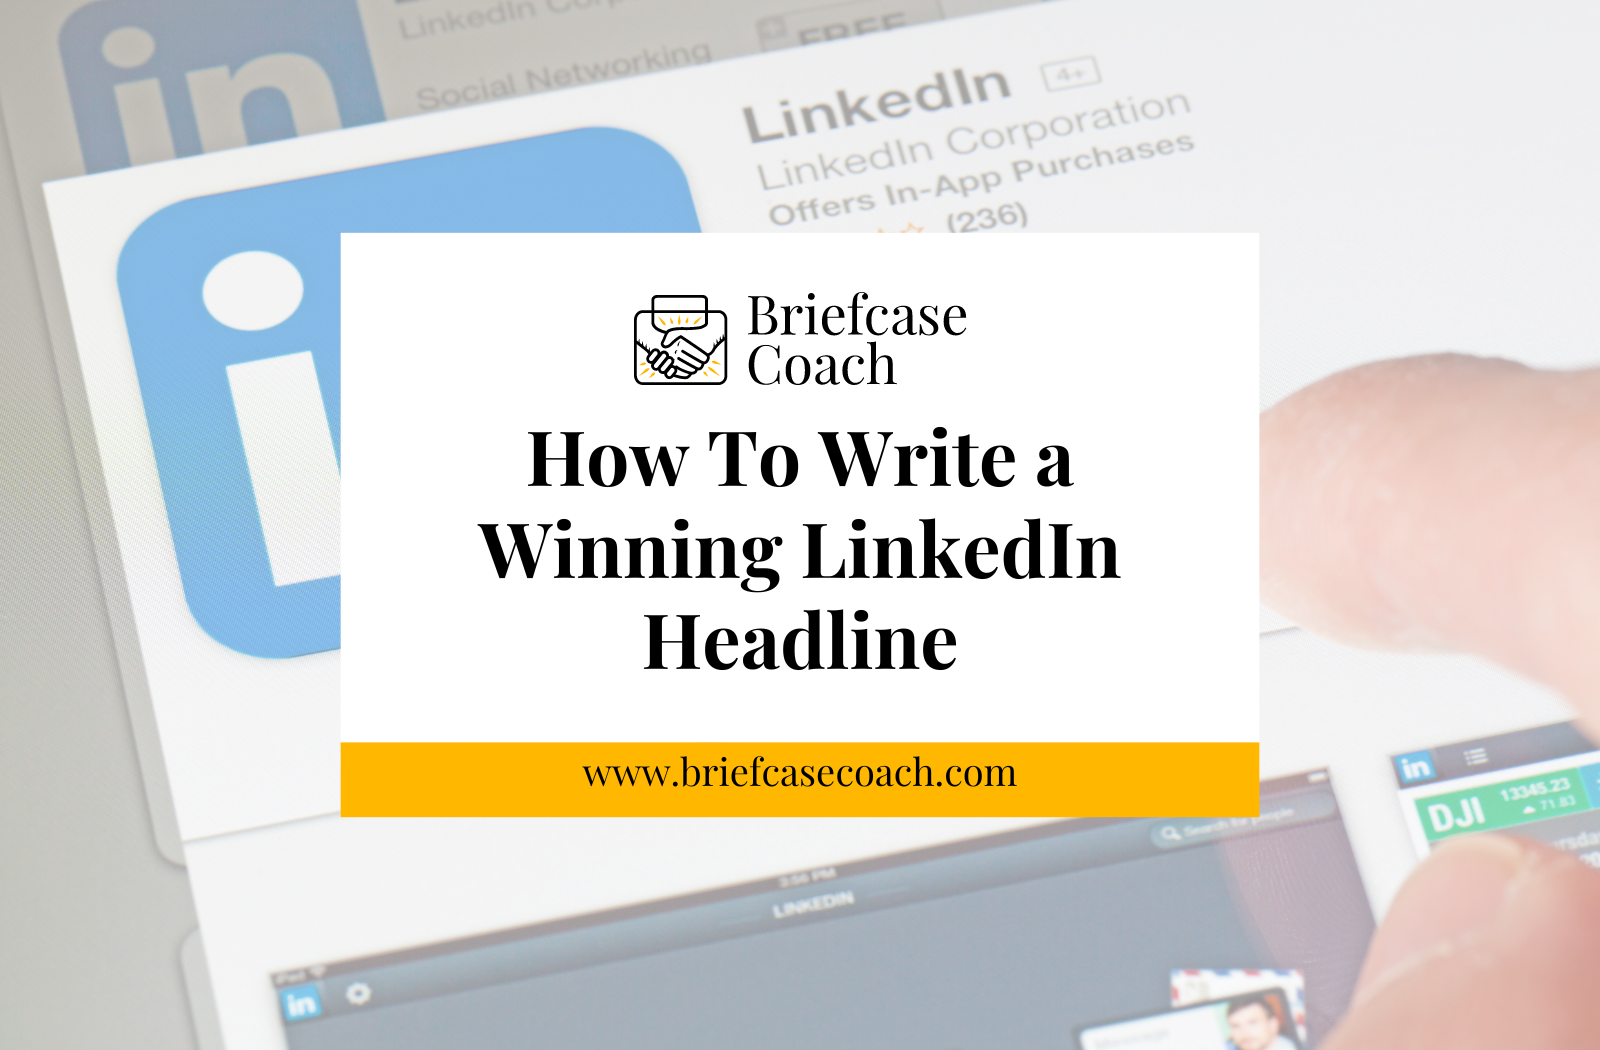 LinkedIn Headline: How to Write a Winning One